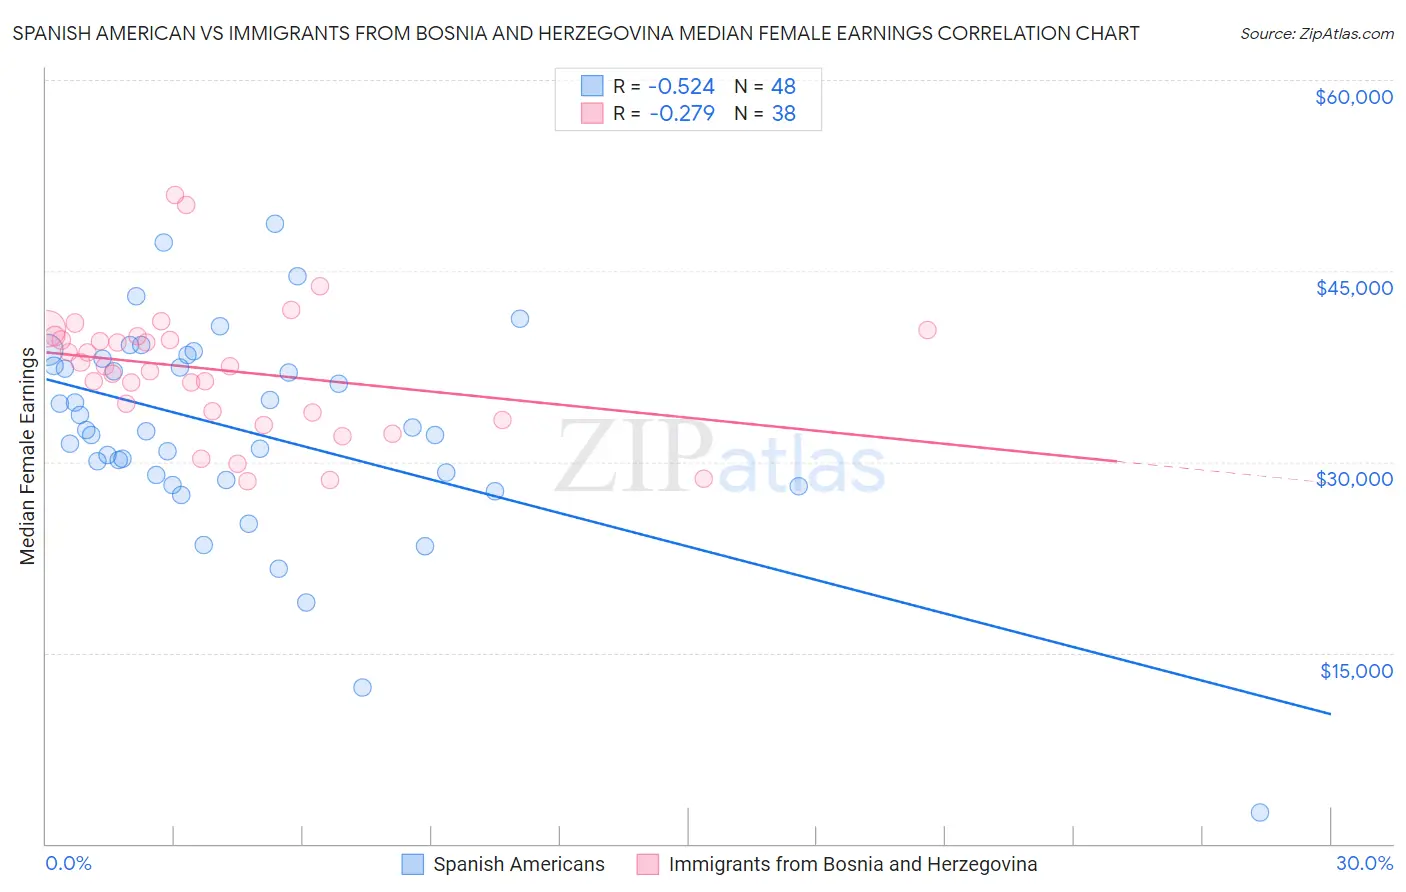 Spanish American vs Immigrants from Bosnia and Herzegovina Median Female Earnings